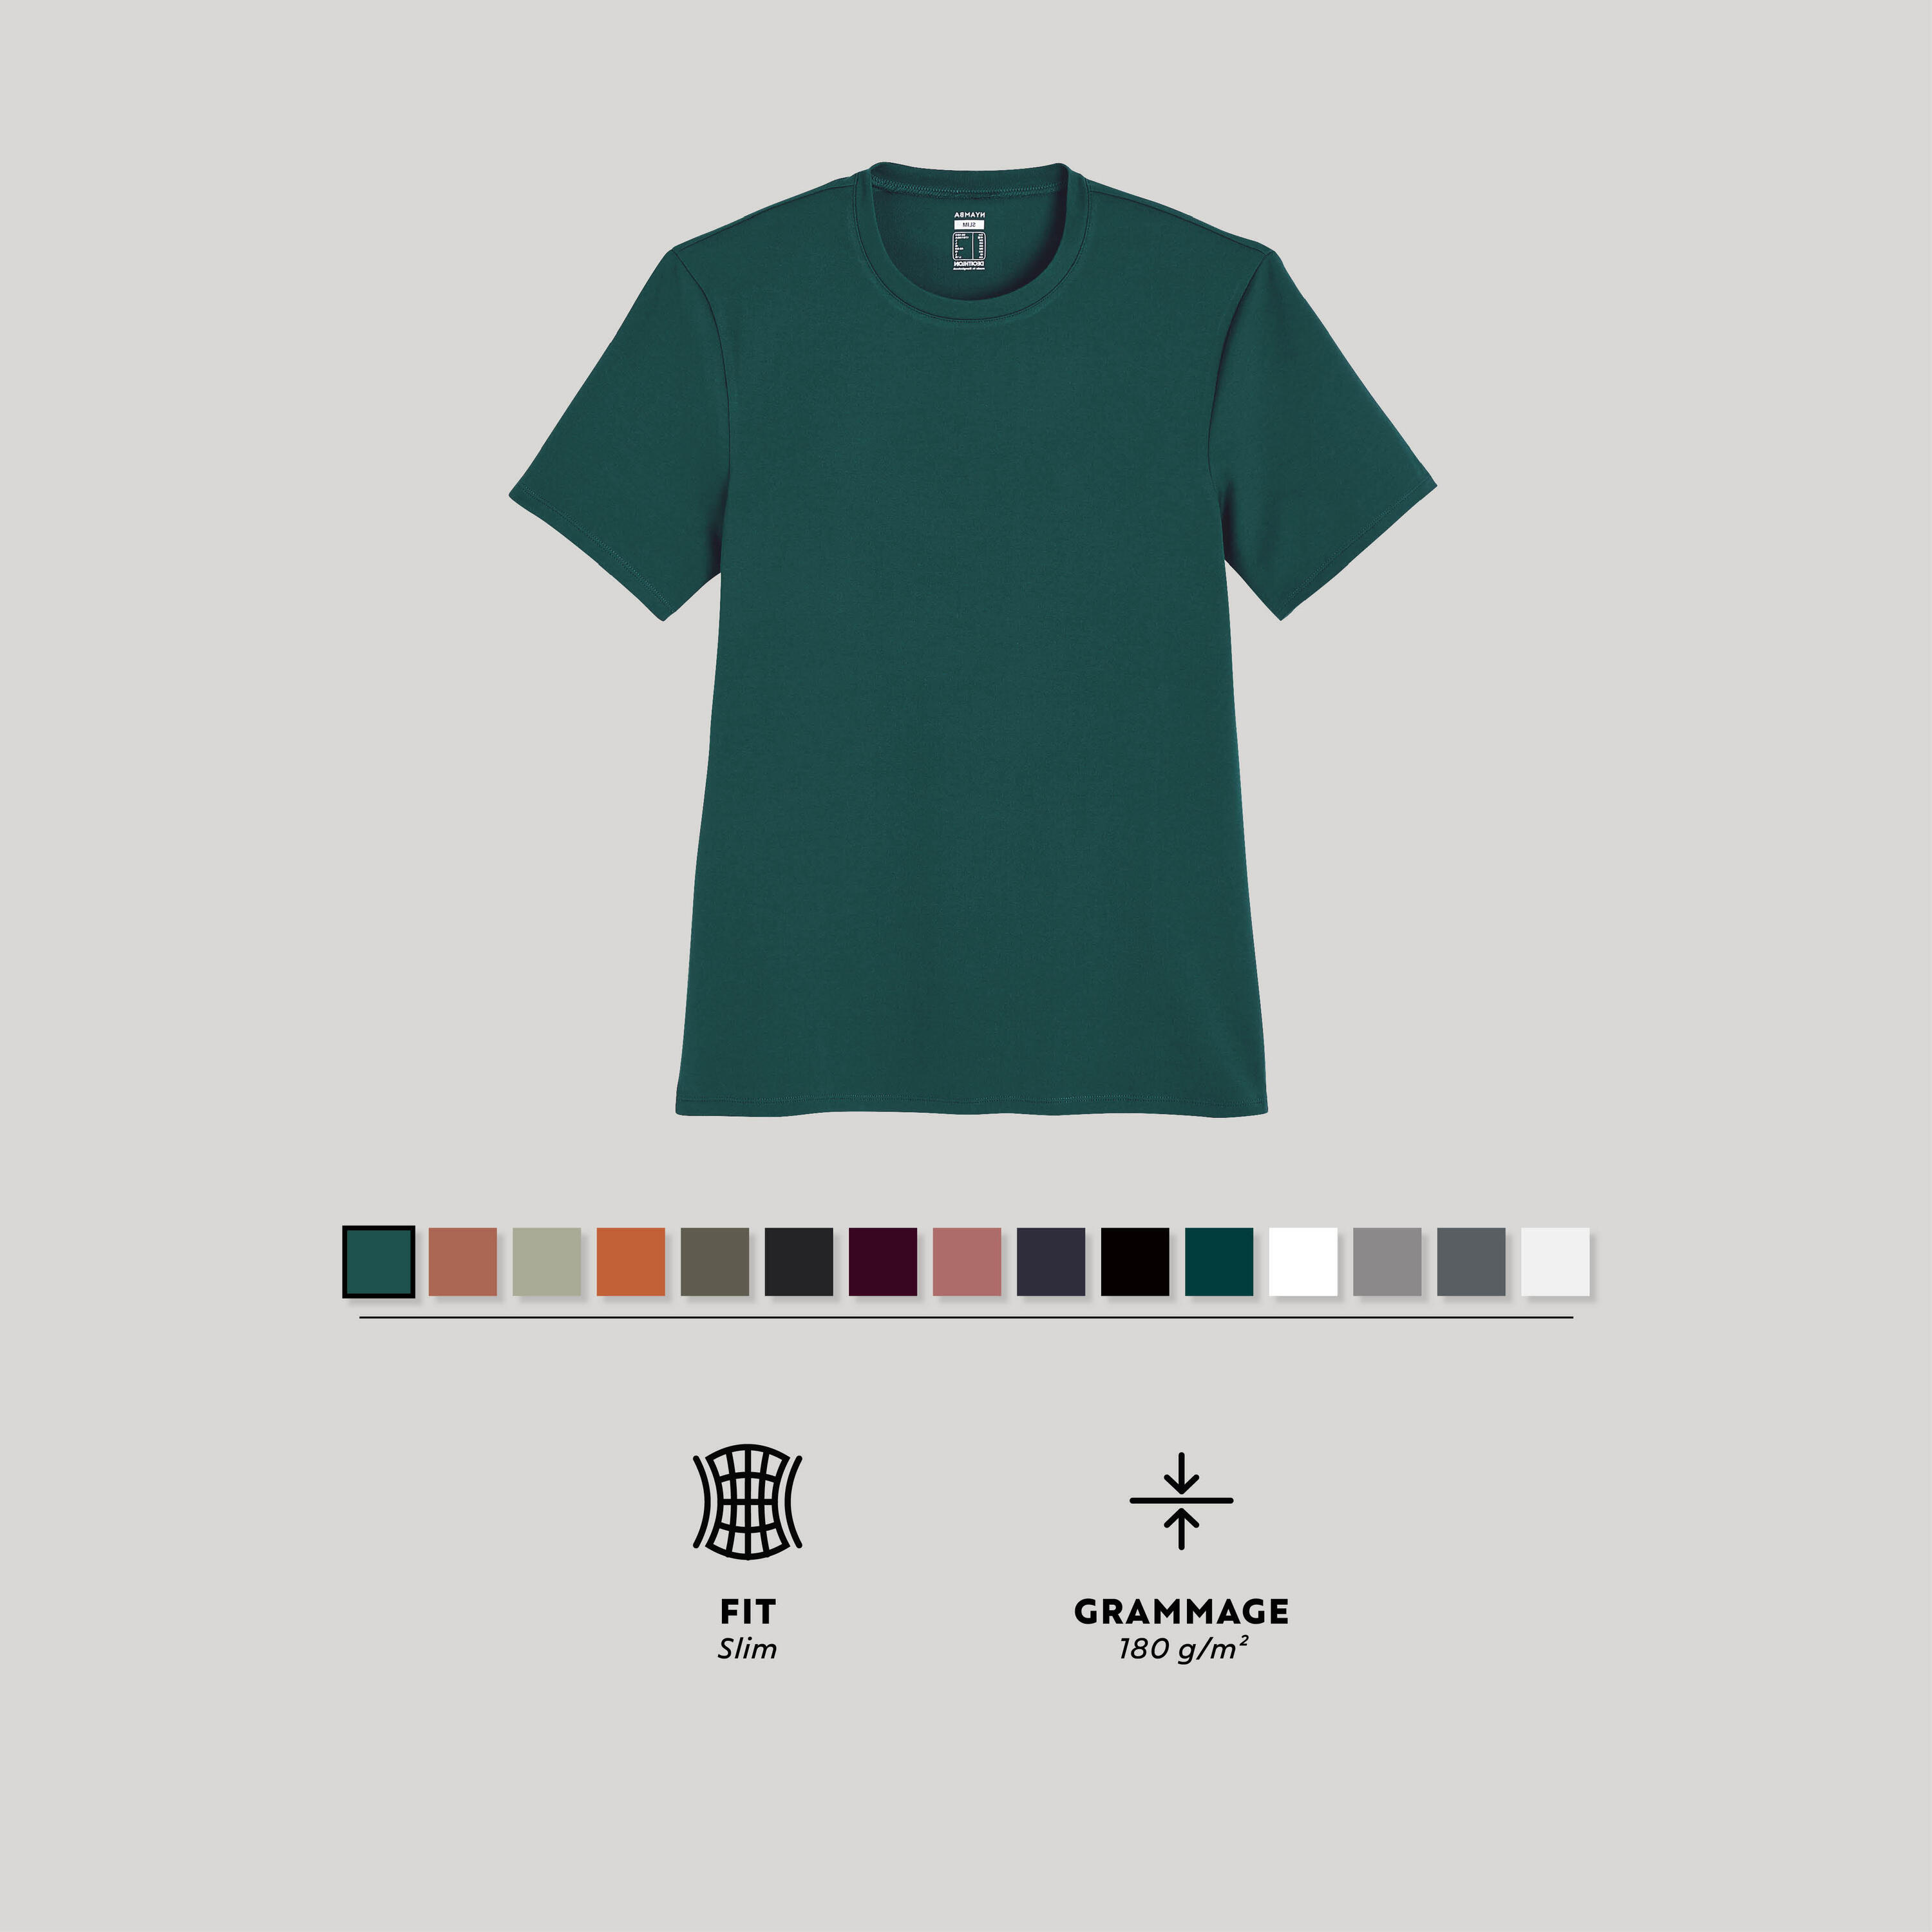 DOMYOS Men's Fitness Slim-Fit T-Shirt 500 - Turquoise